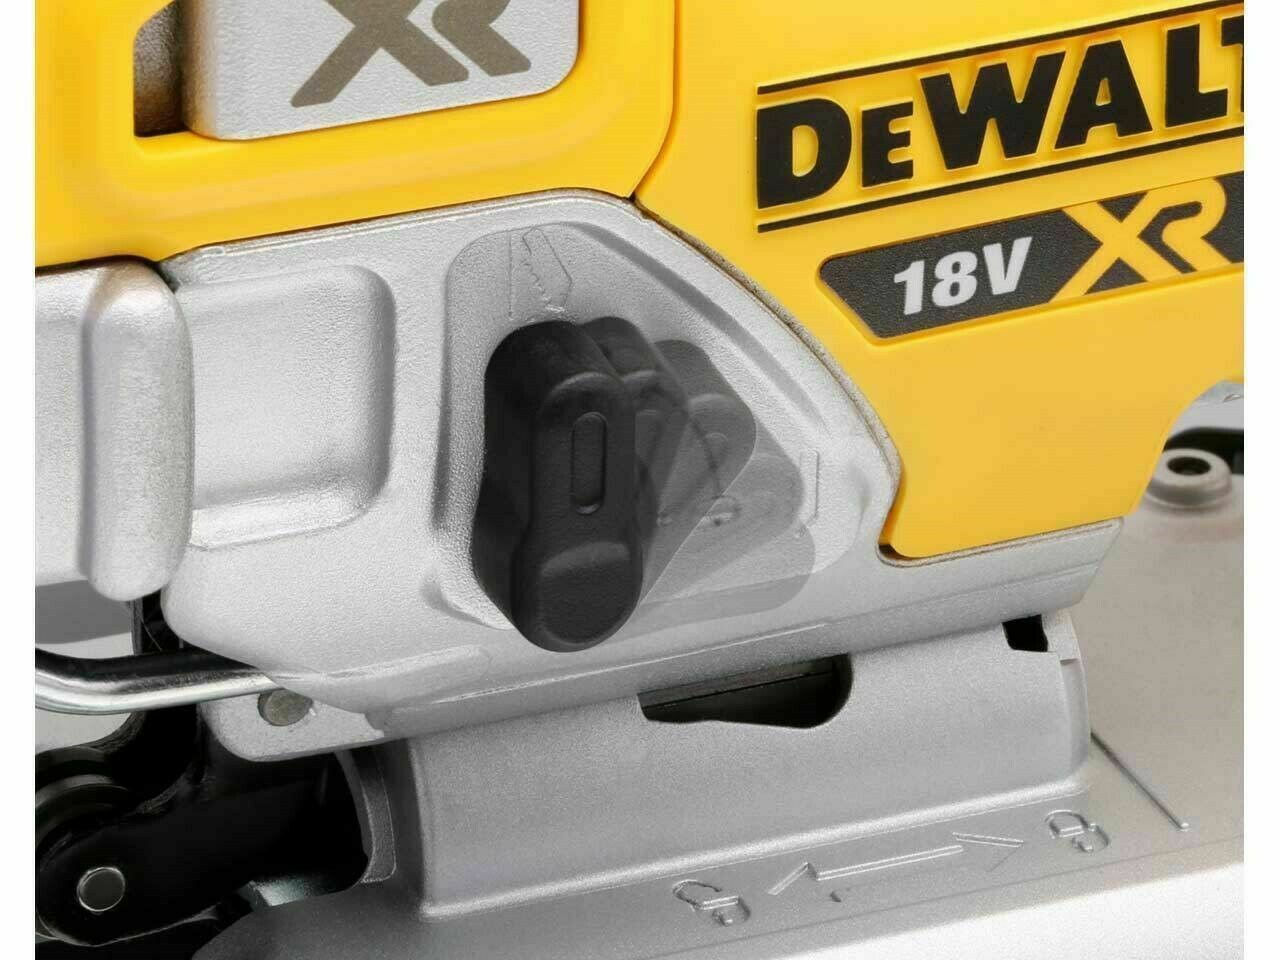 DeWalt DCS334N 18v XR Cordless Brushless Top Handle Jigsaw Bare Unit Bay18